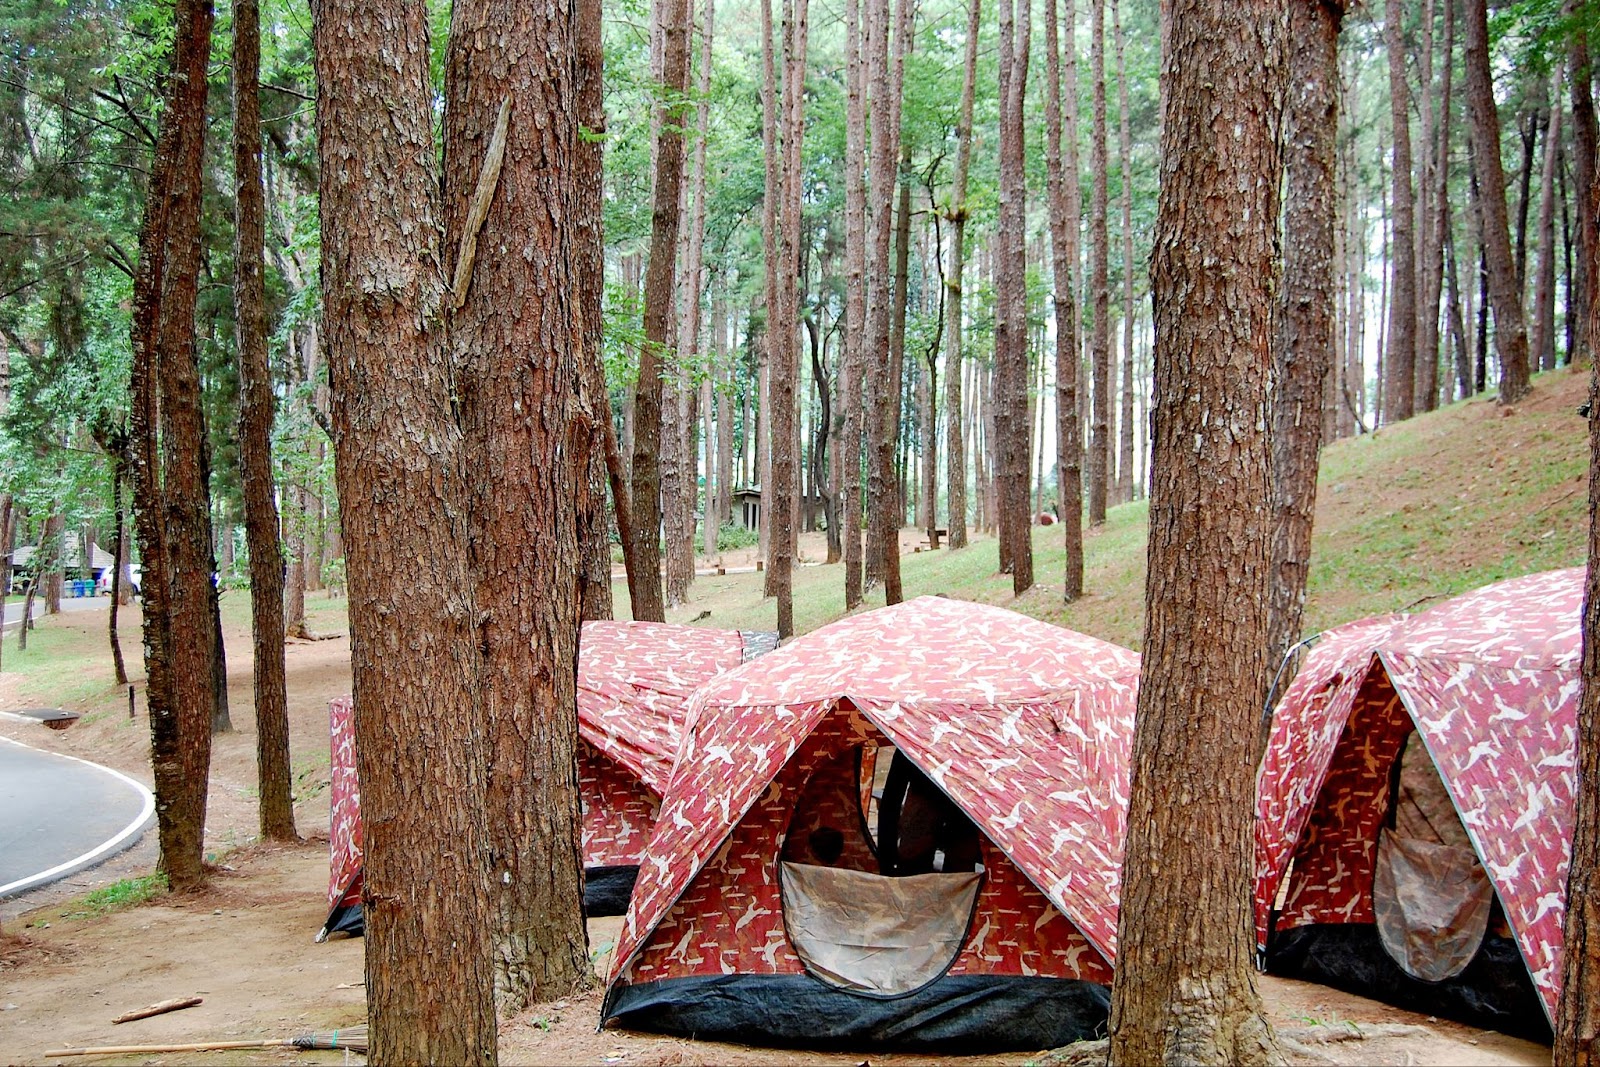 Camping tents at the Doi Inthanon National Park